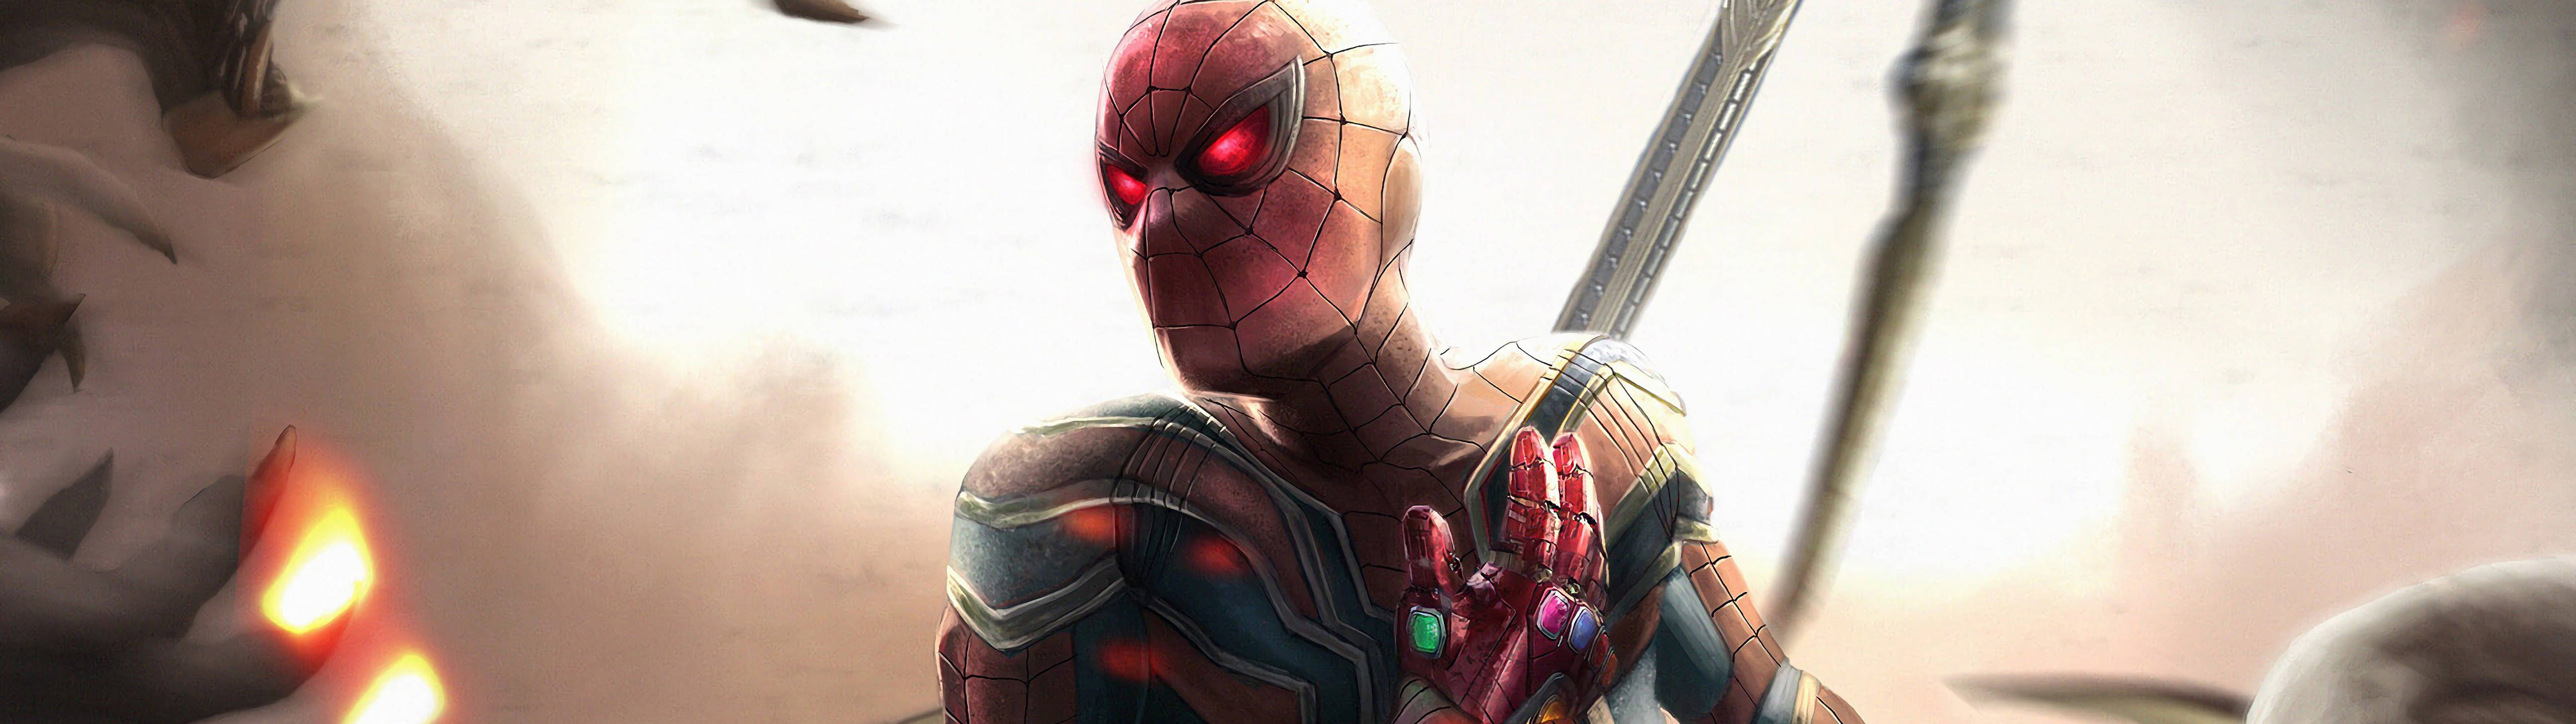 Marvel's Spiderman With Infinity Gauntlet 5120 X 1440